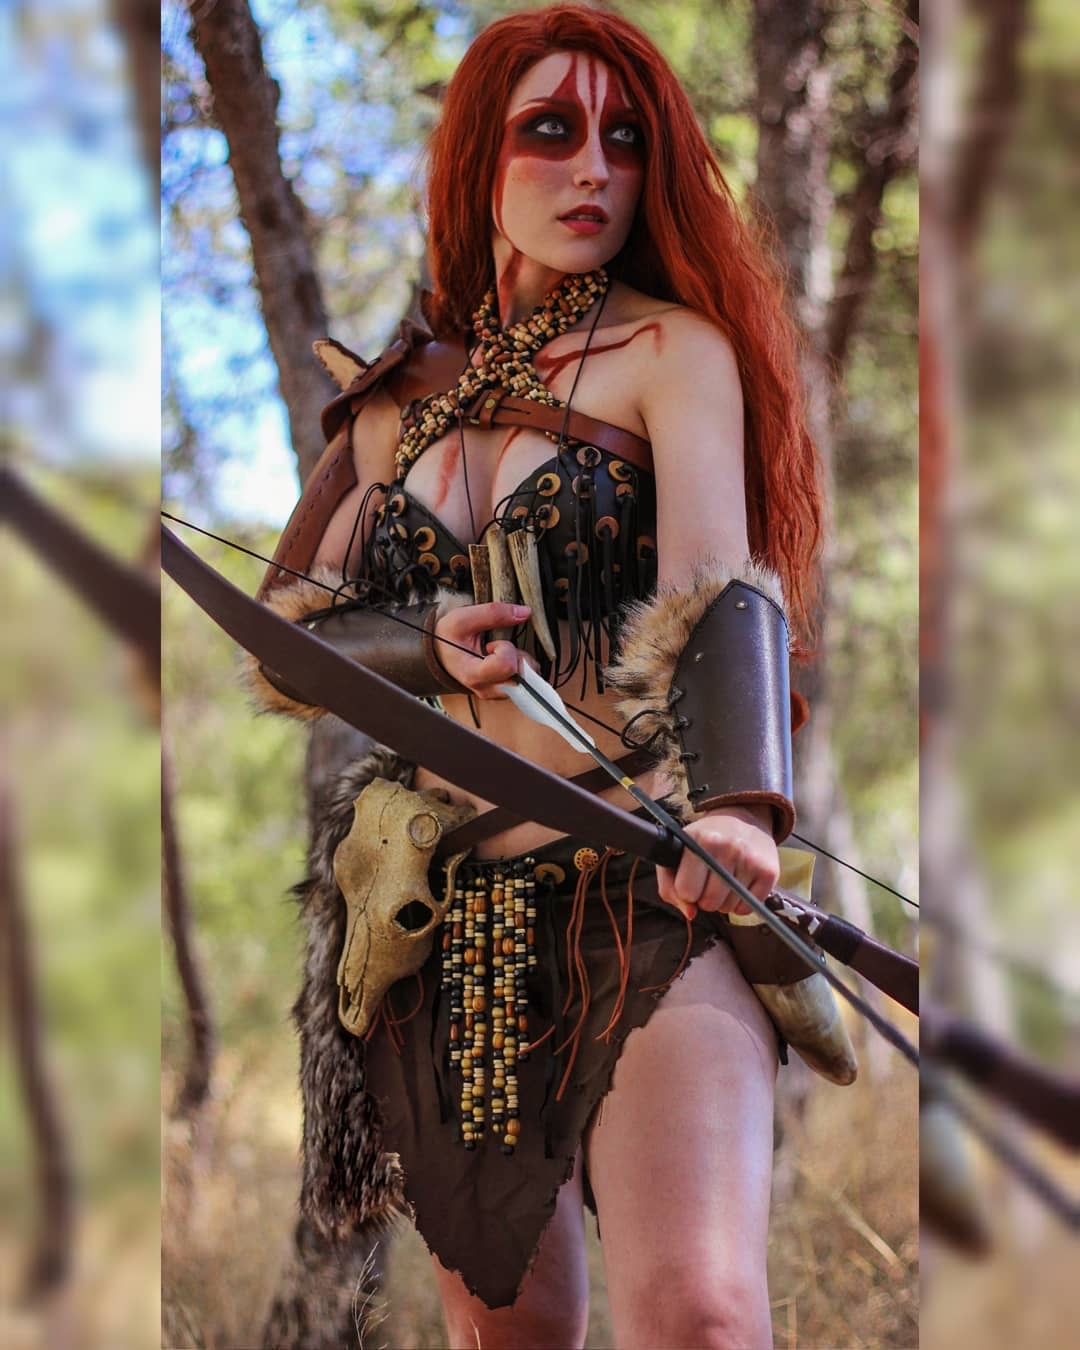 @hannah_redfoxcloset: sexy redhead cosplayer